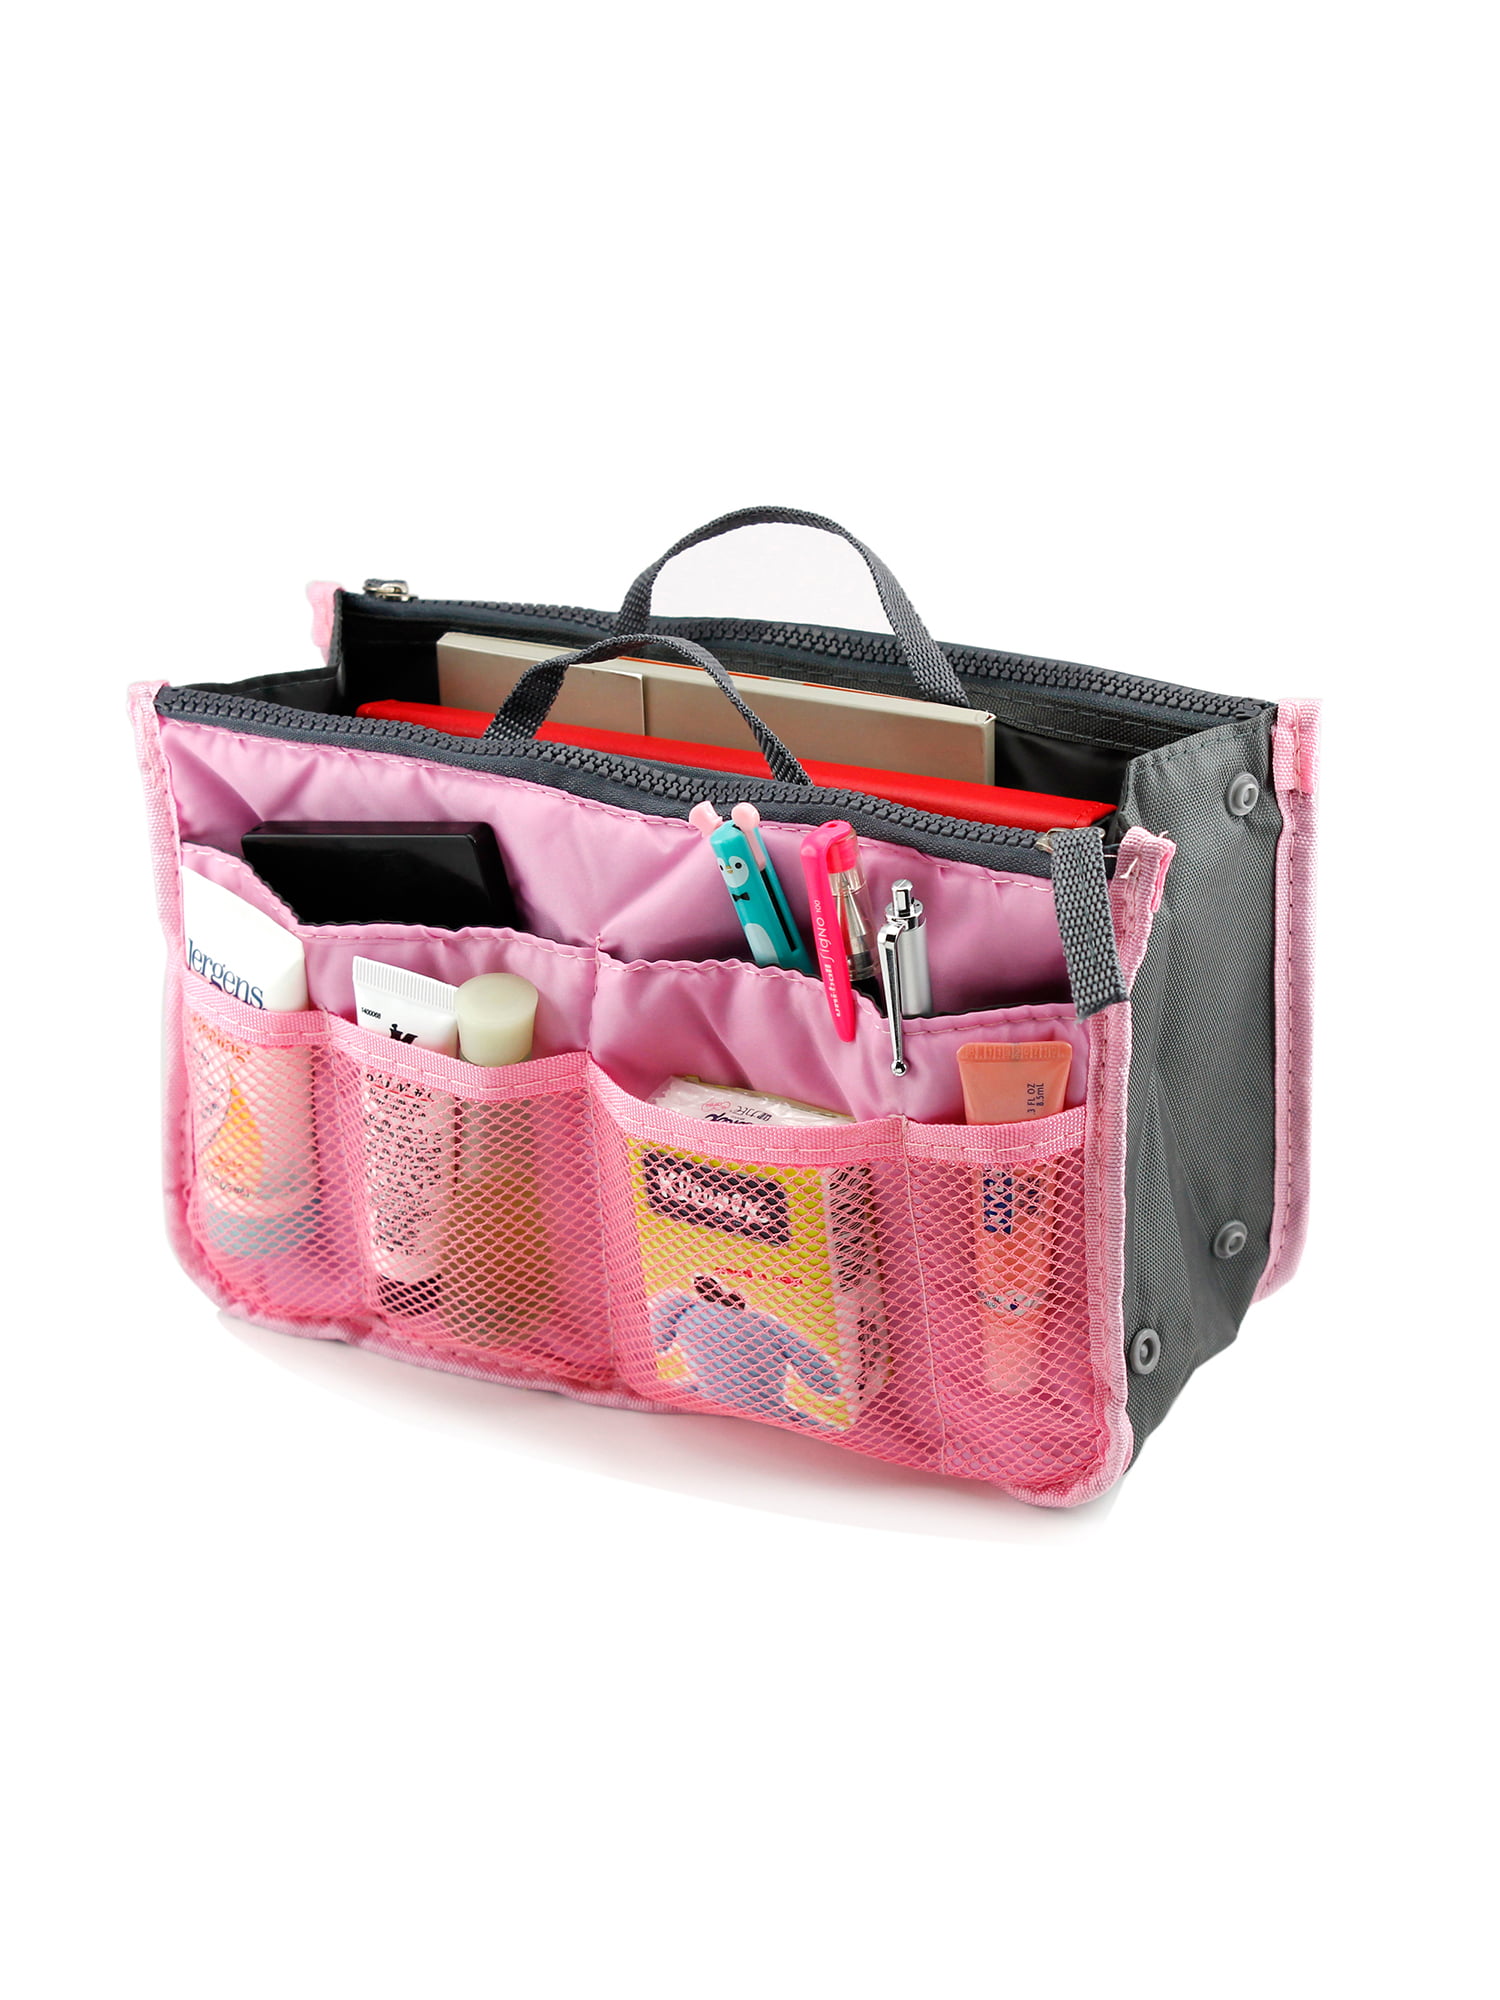 2dxuixsh Bag Insert Organizer for Tote Bag Womens Ladies Tote Bag Fashion Shoulder Bags Tote Leather Bag Handbags + Cat Pendant Purse Pink One size